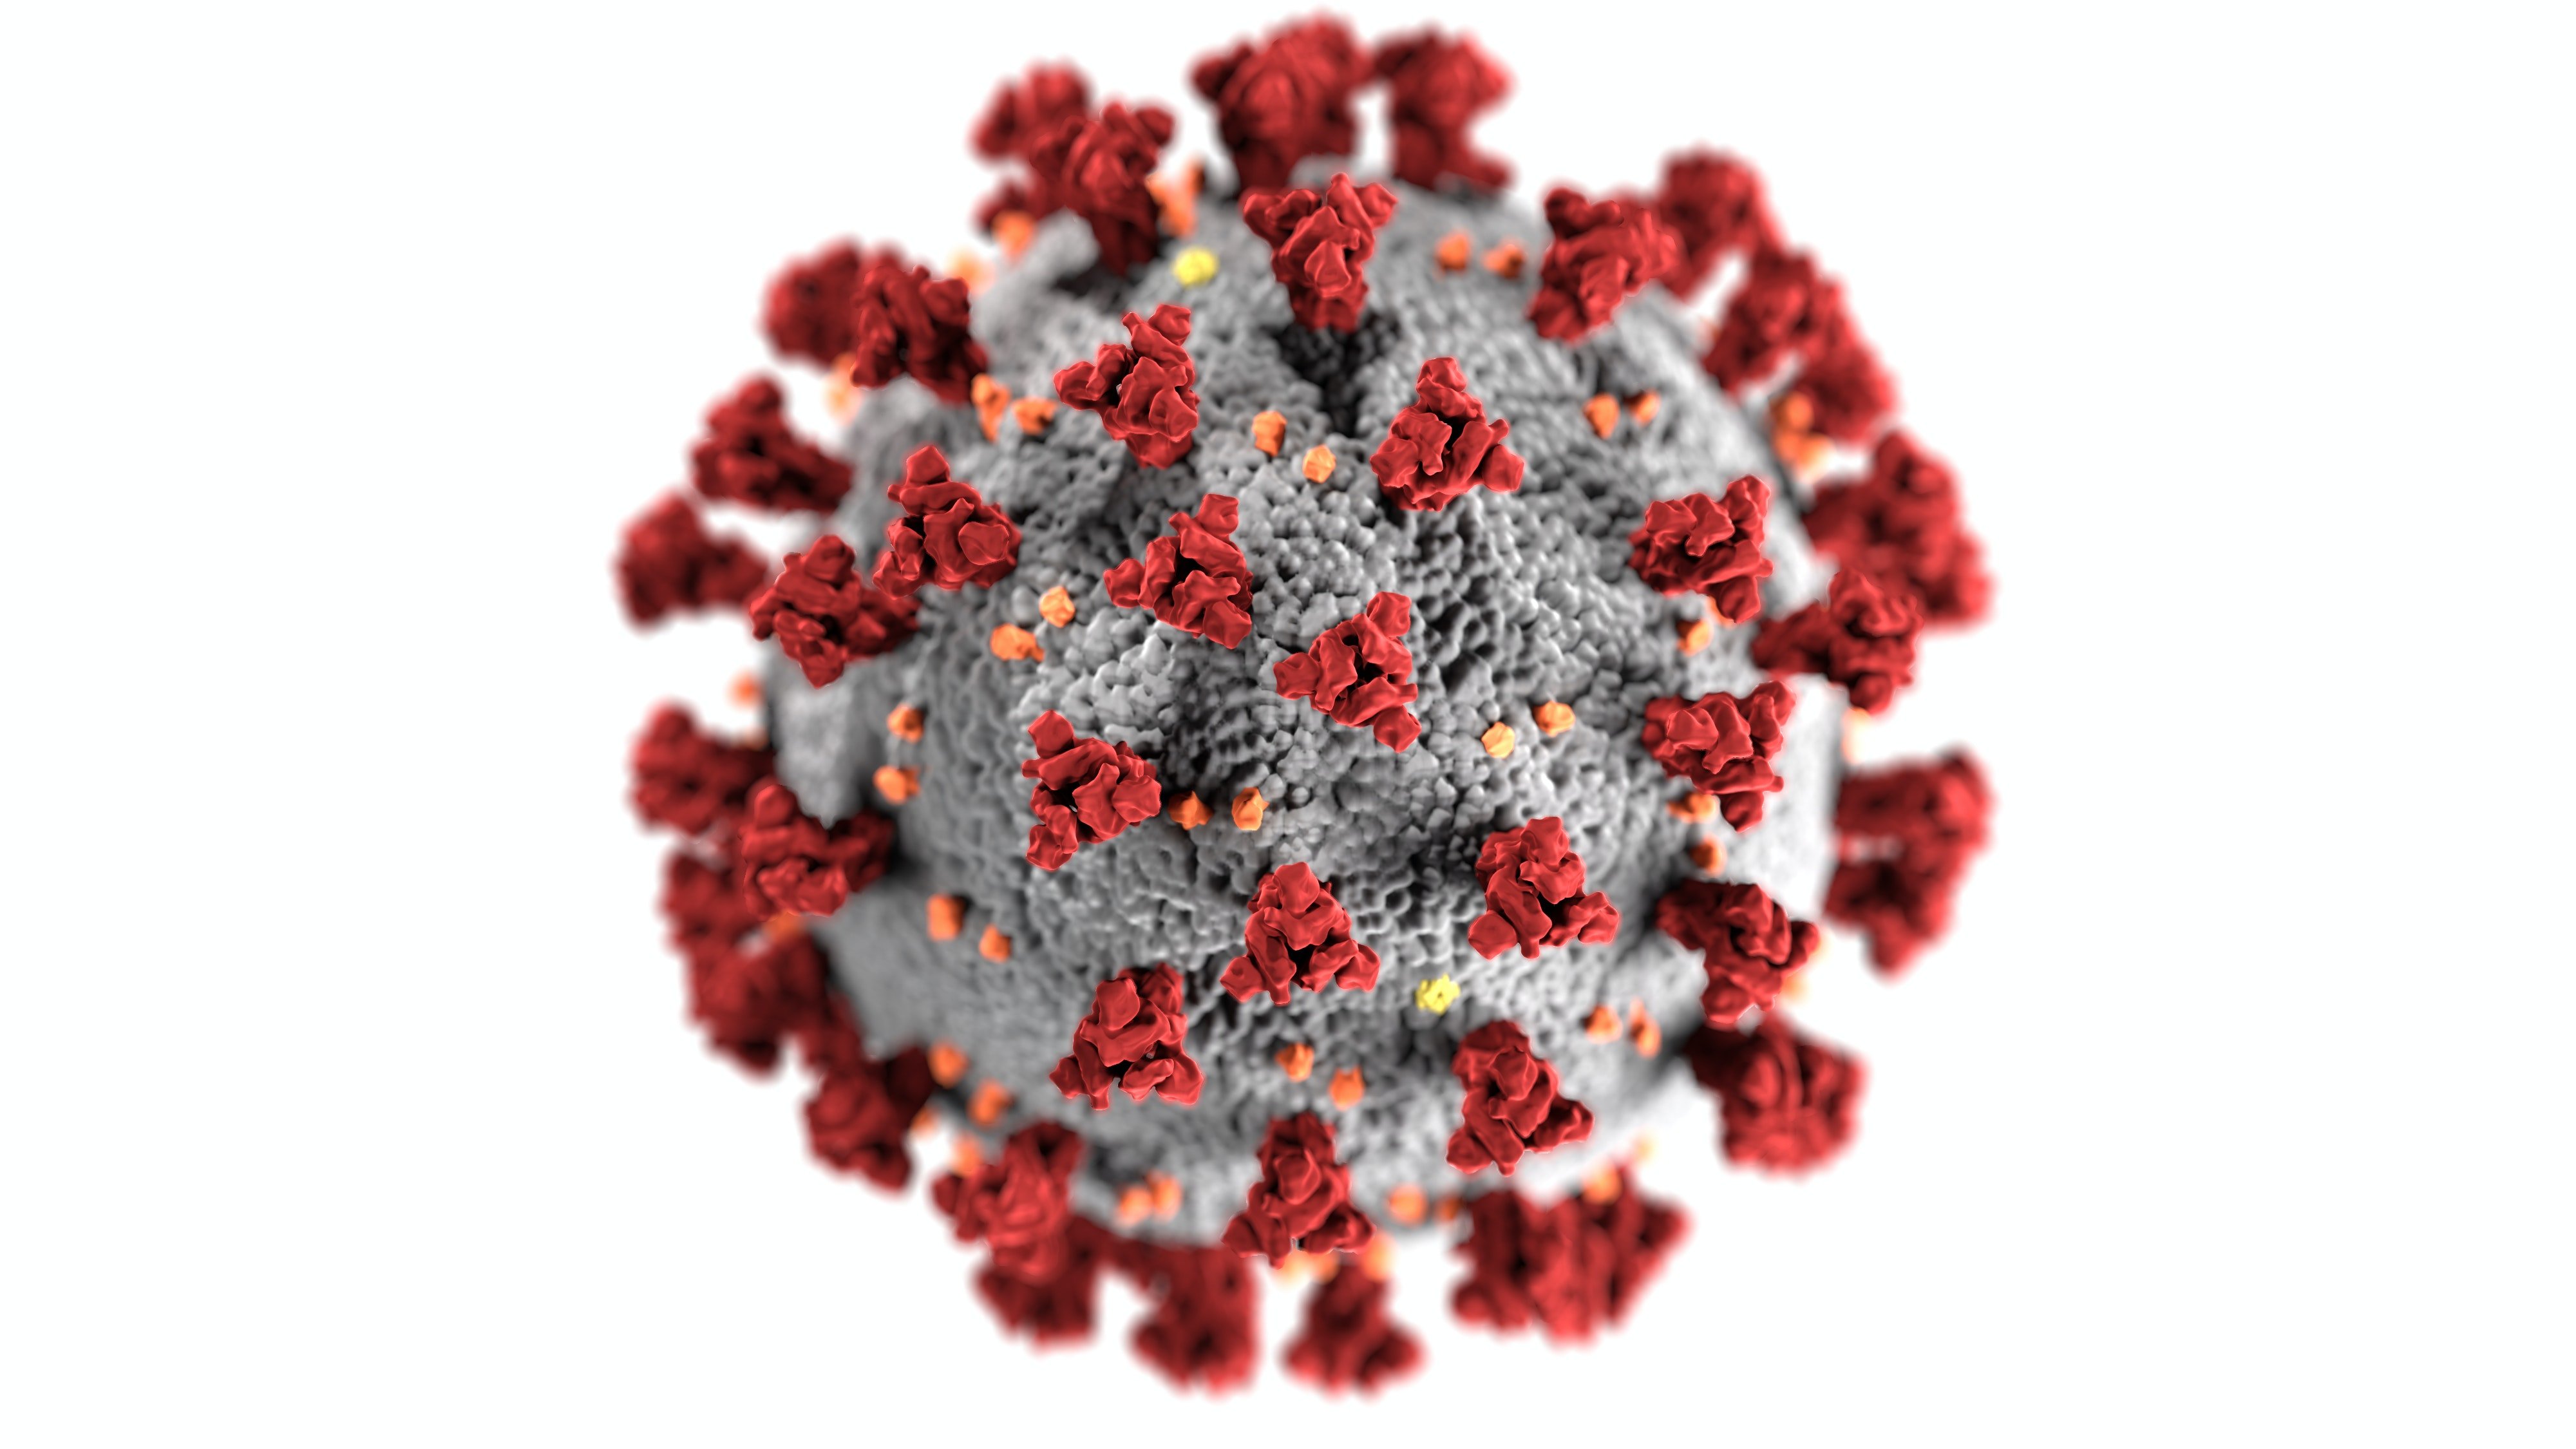 The novel coronavirus. | Source: Pexels